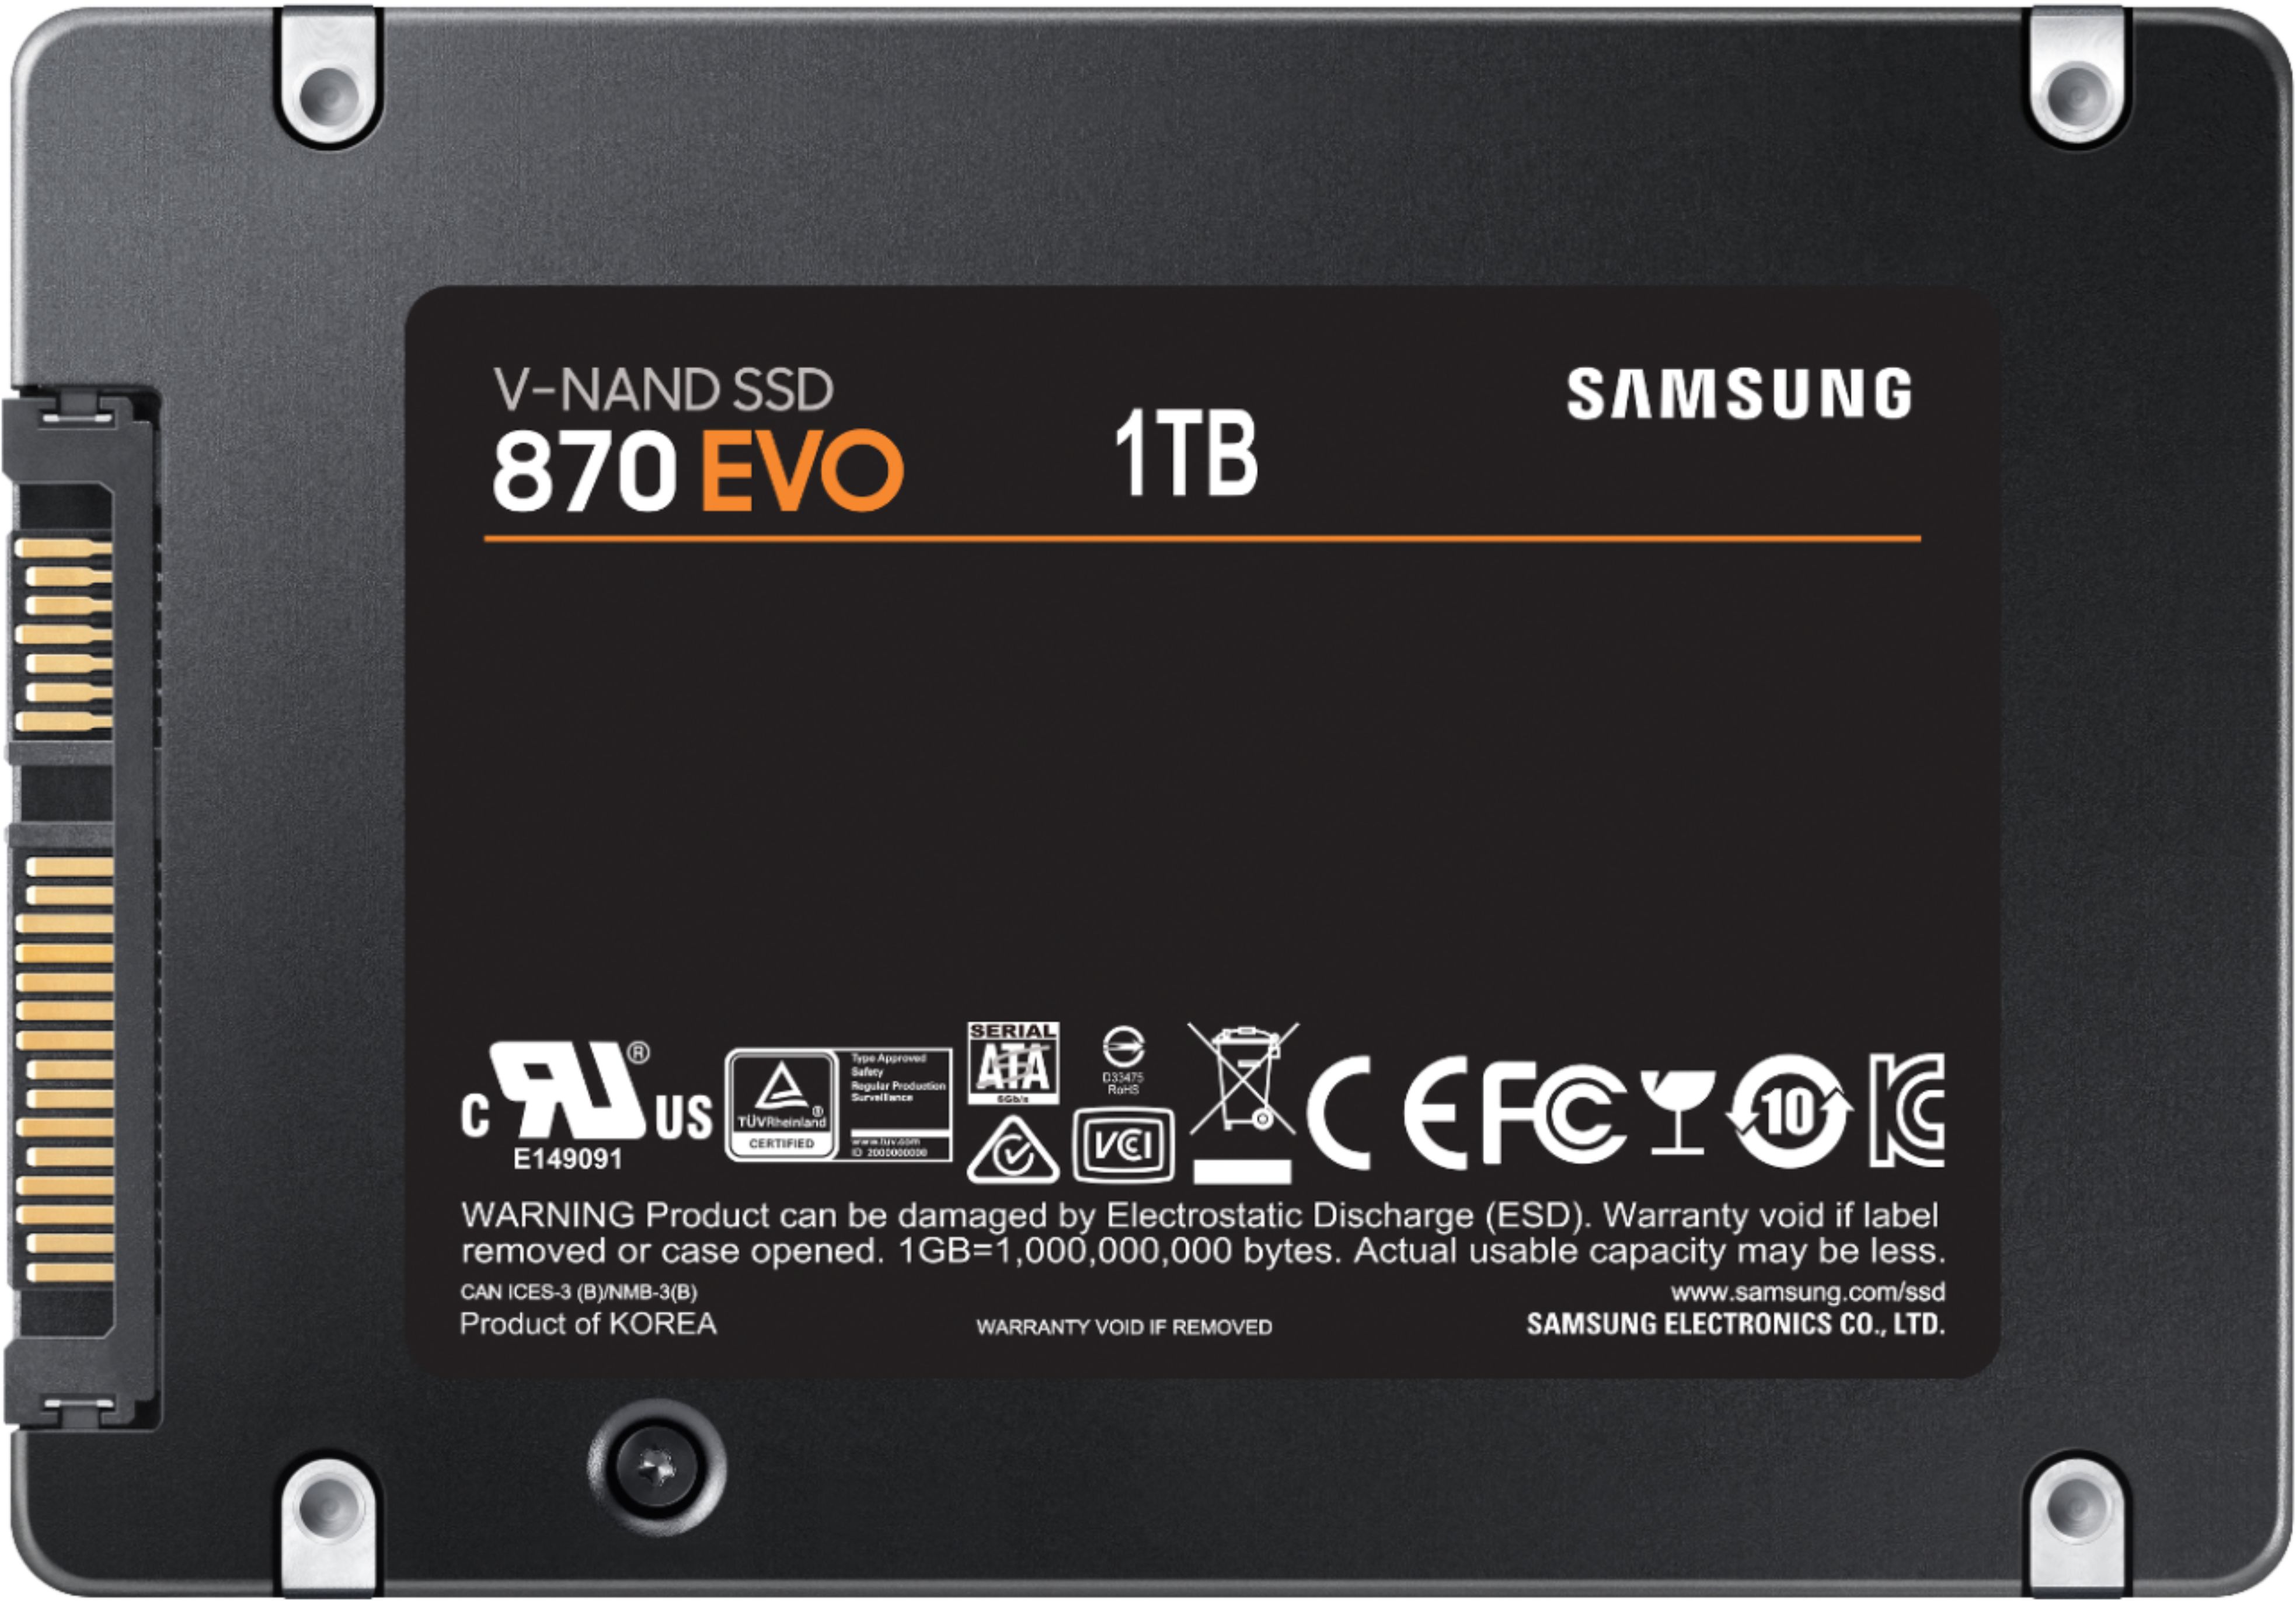 1TB Samsung 870 EVO 2.5” SATA Solid State Drive SSD (Geek Squad Refurbished) - $64.99 + Free Shipping